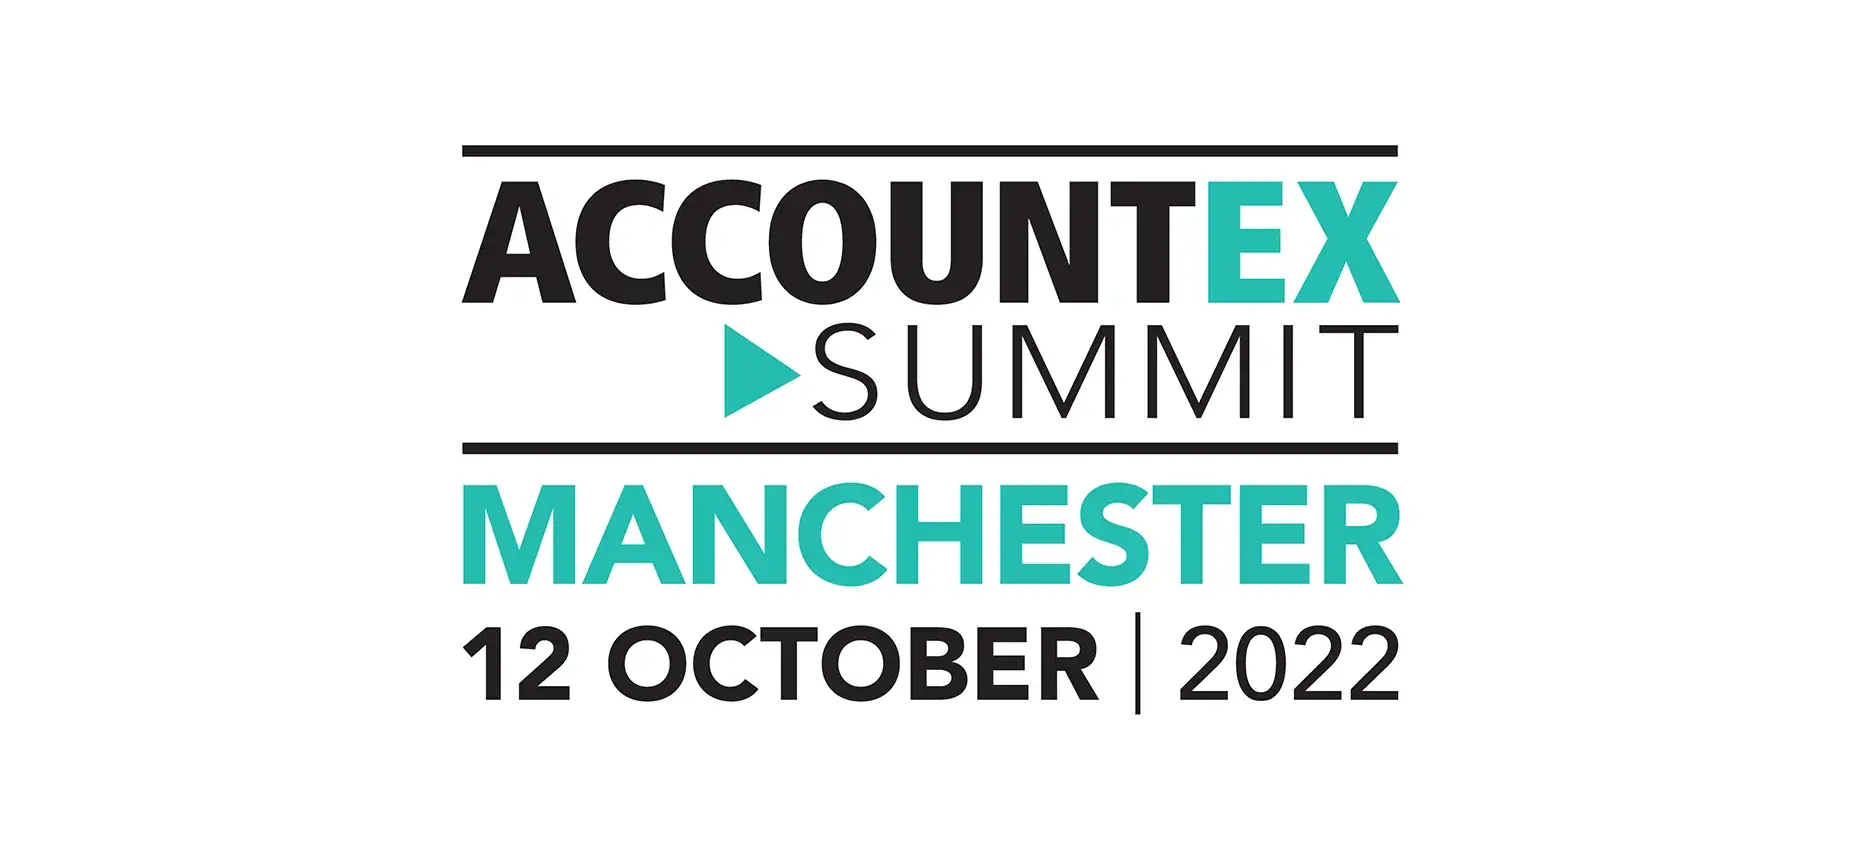 Accountex summit manchester